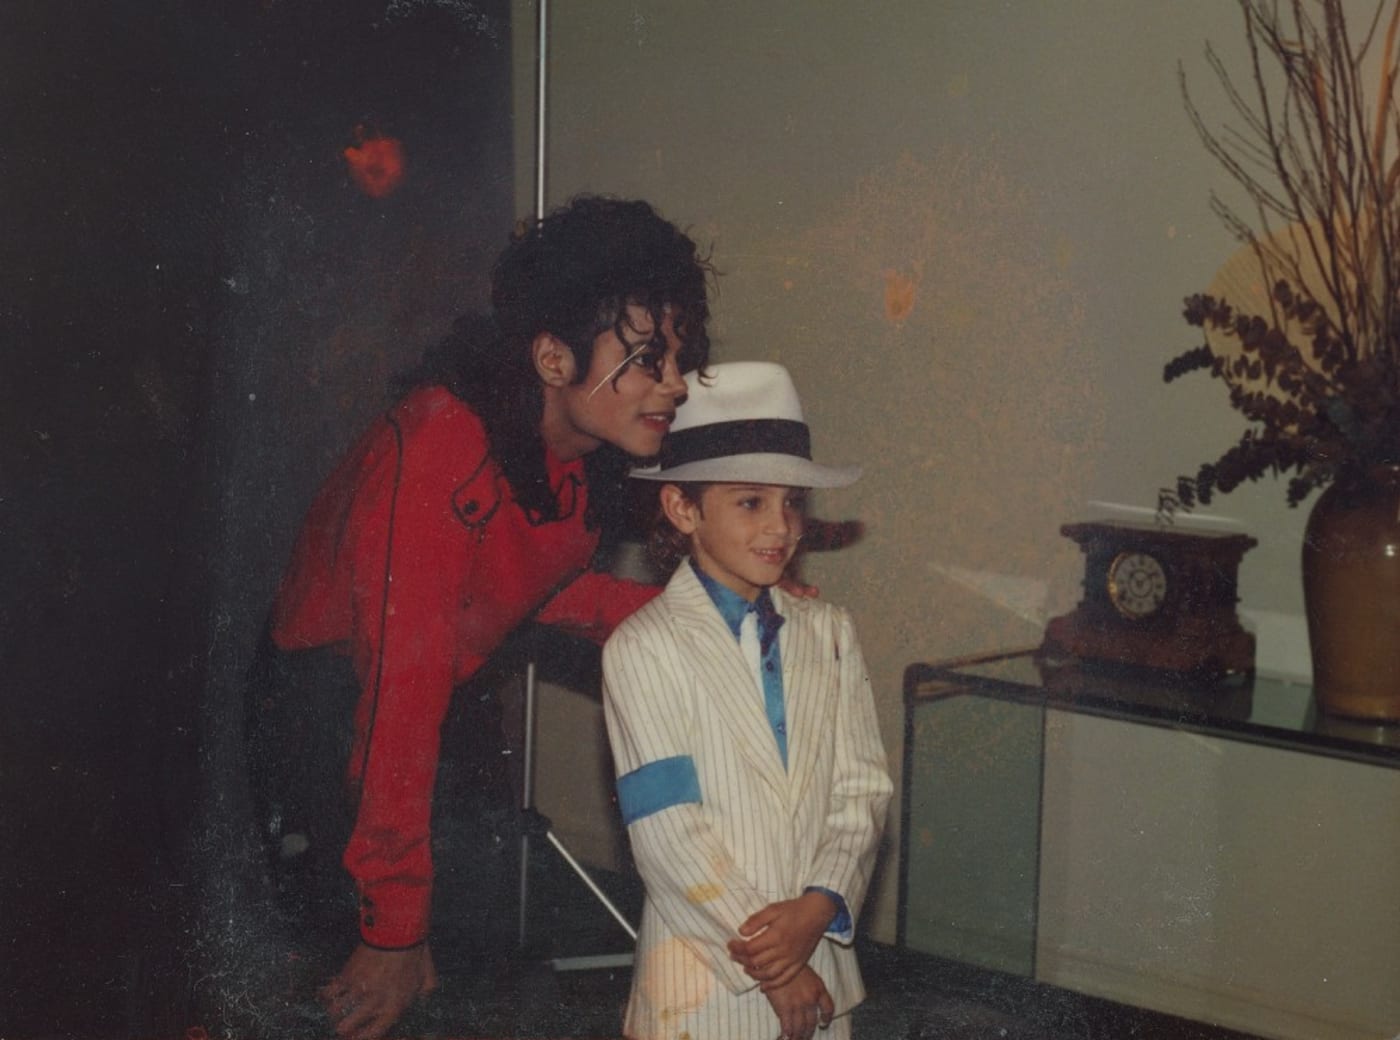 Michael Jackson, Wade Robson